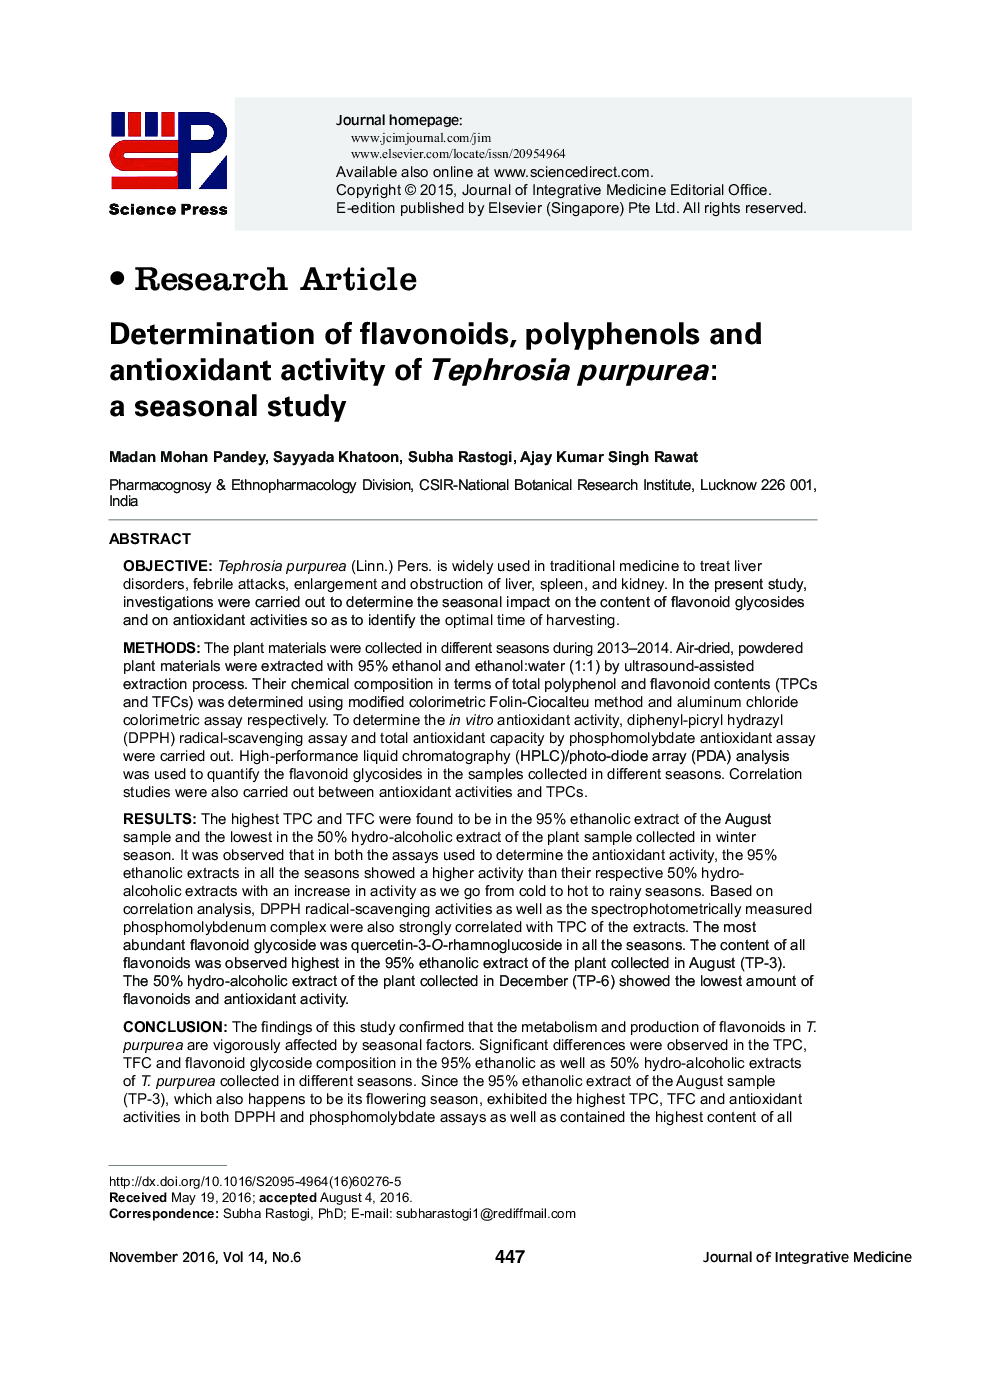 Determination of flavonoids, polyphenols and antioxidant activity of Tephrosia purpurea: a seasonal study